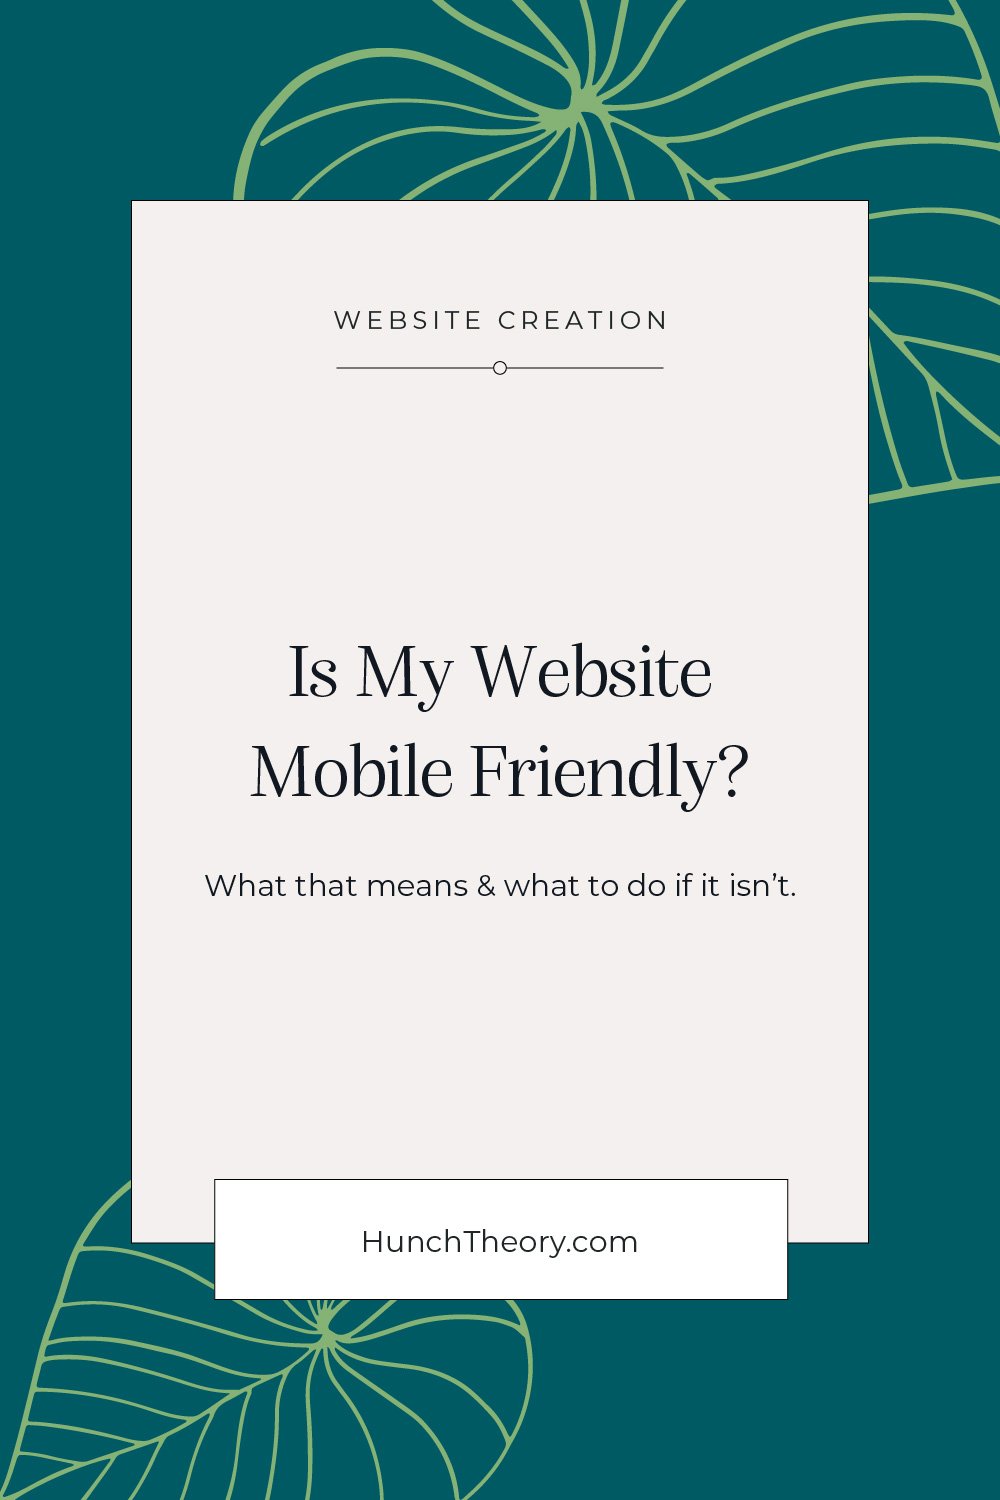 Is website mobile friendly?